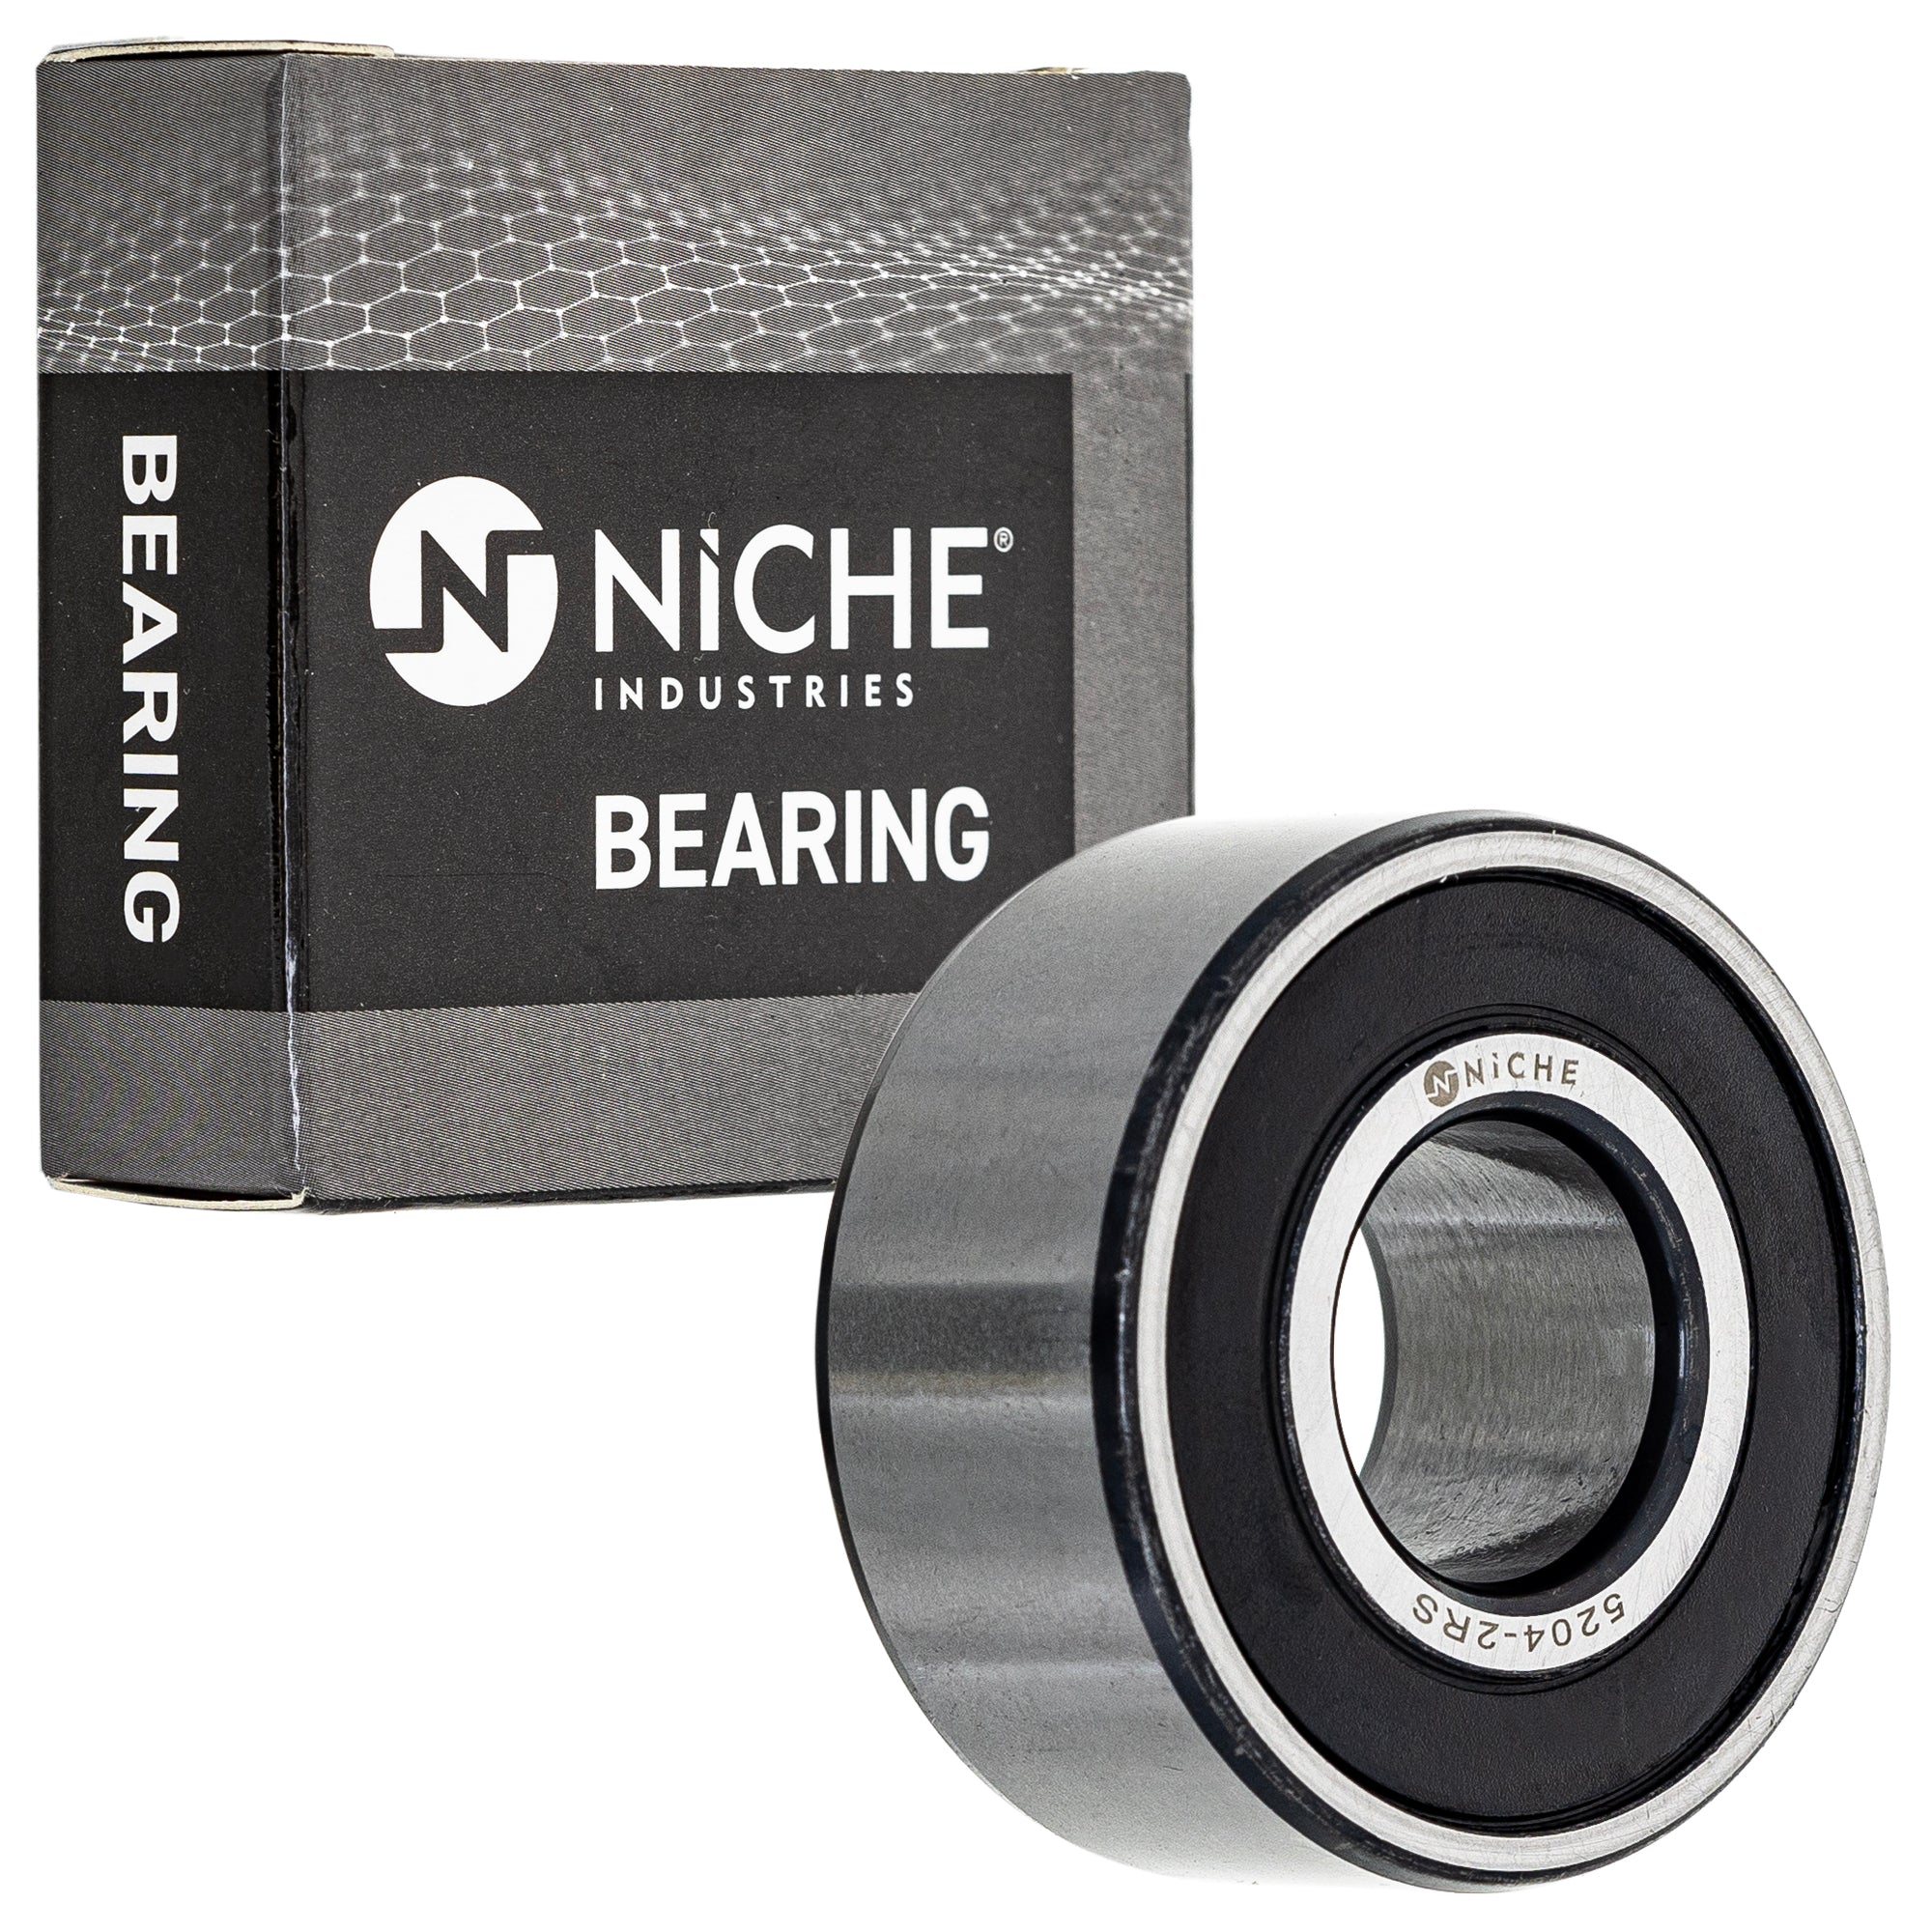 NICHE 519-CBB2260R Bearing for zOTHER ZZR600 Zephyr Z1000 W650